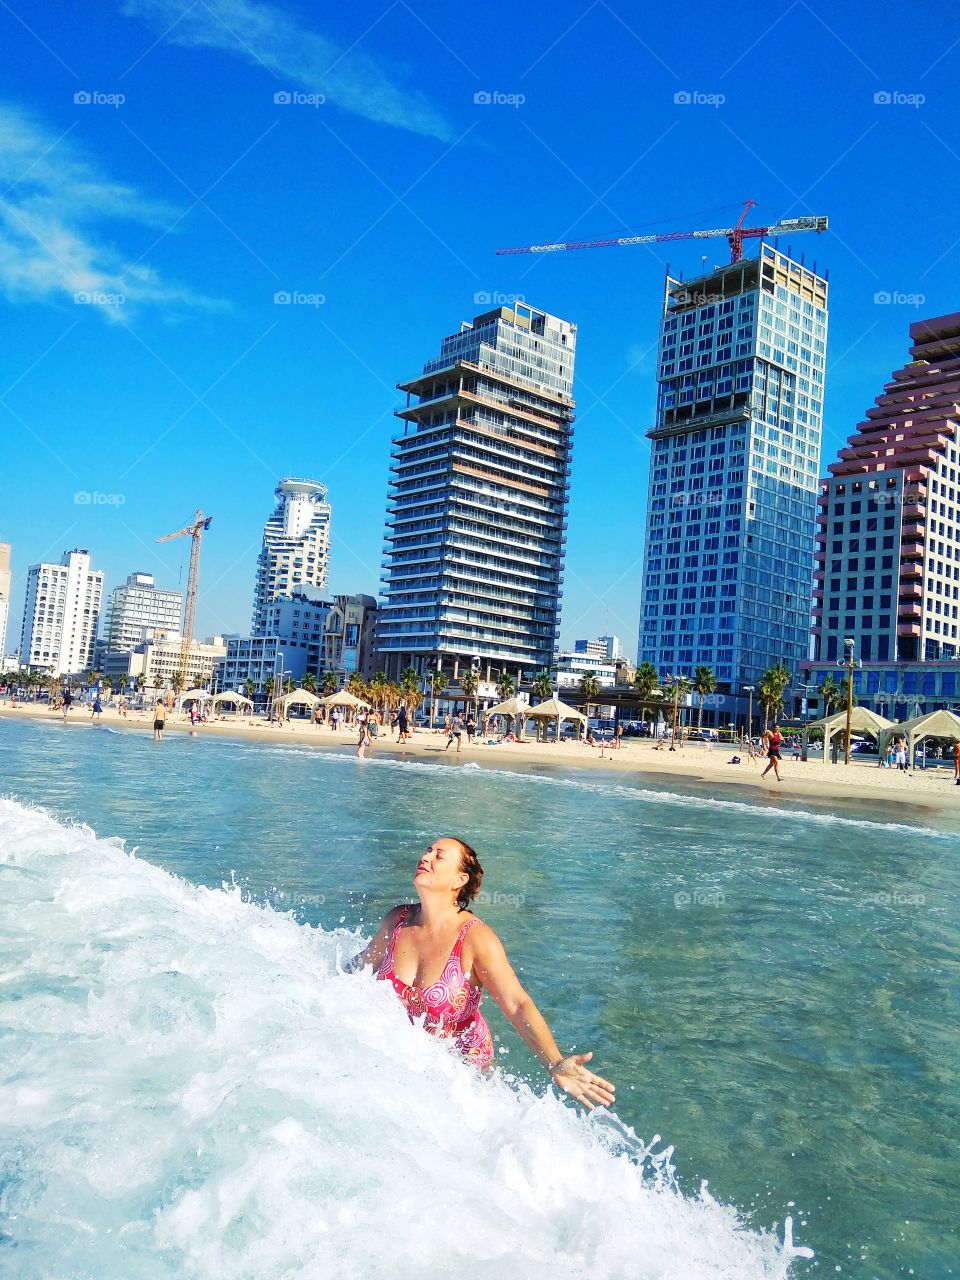 Pure hapiness and fun on beach of Tel Aviv, Israel!